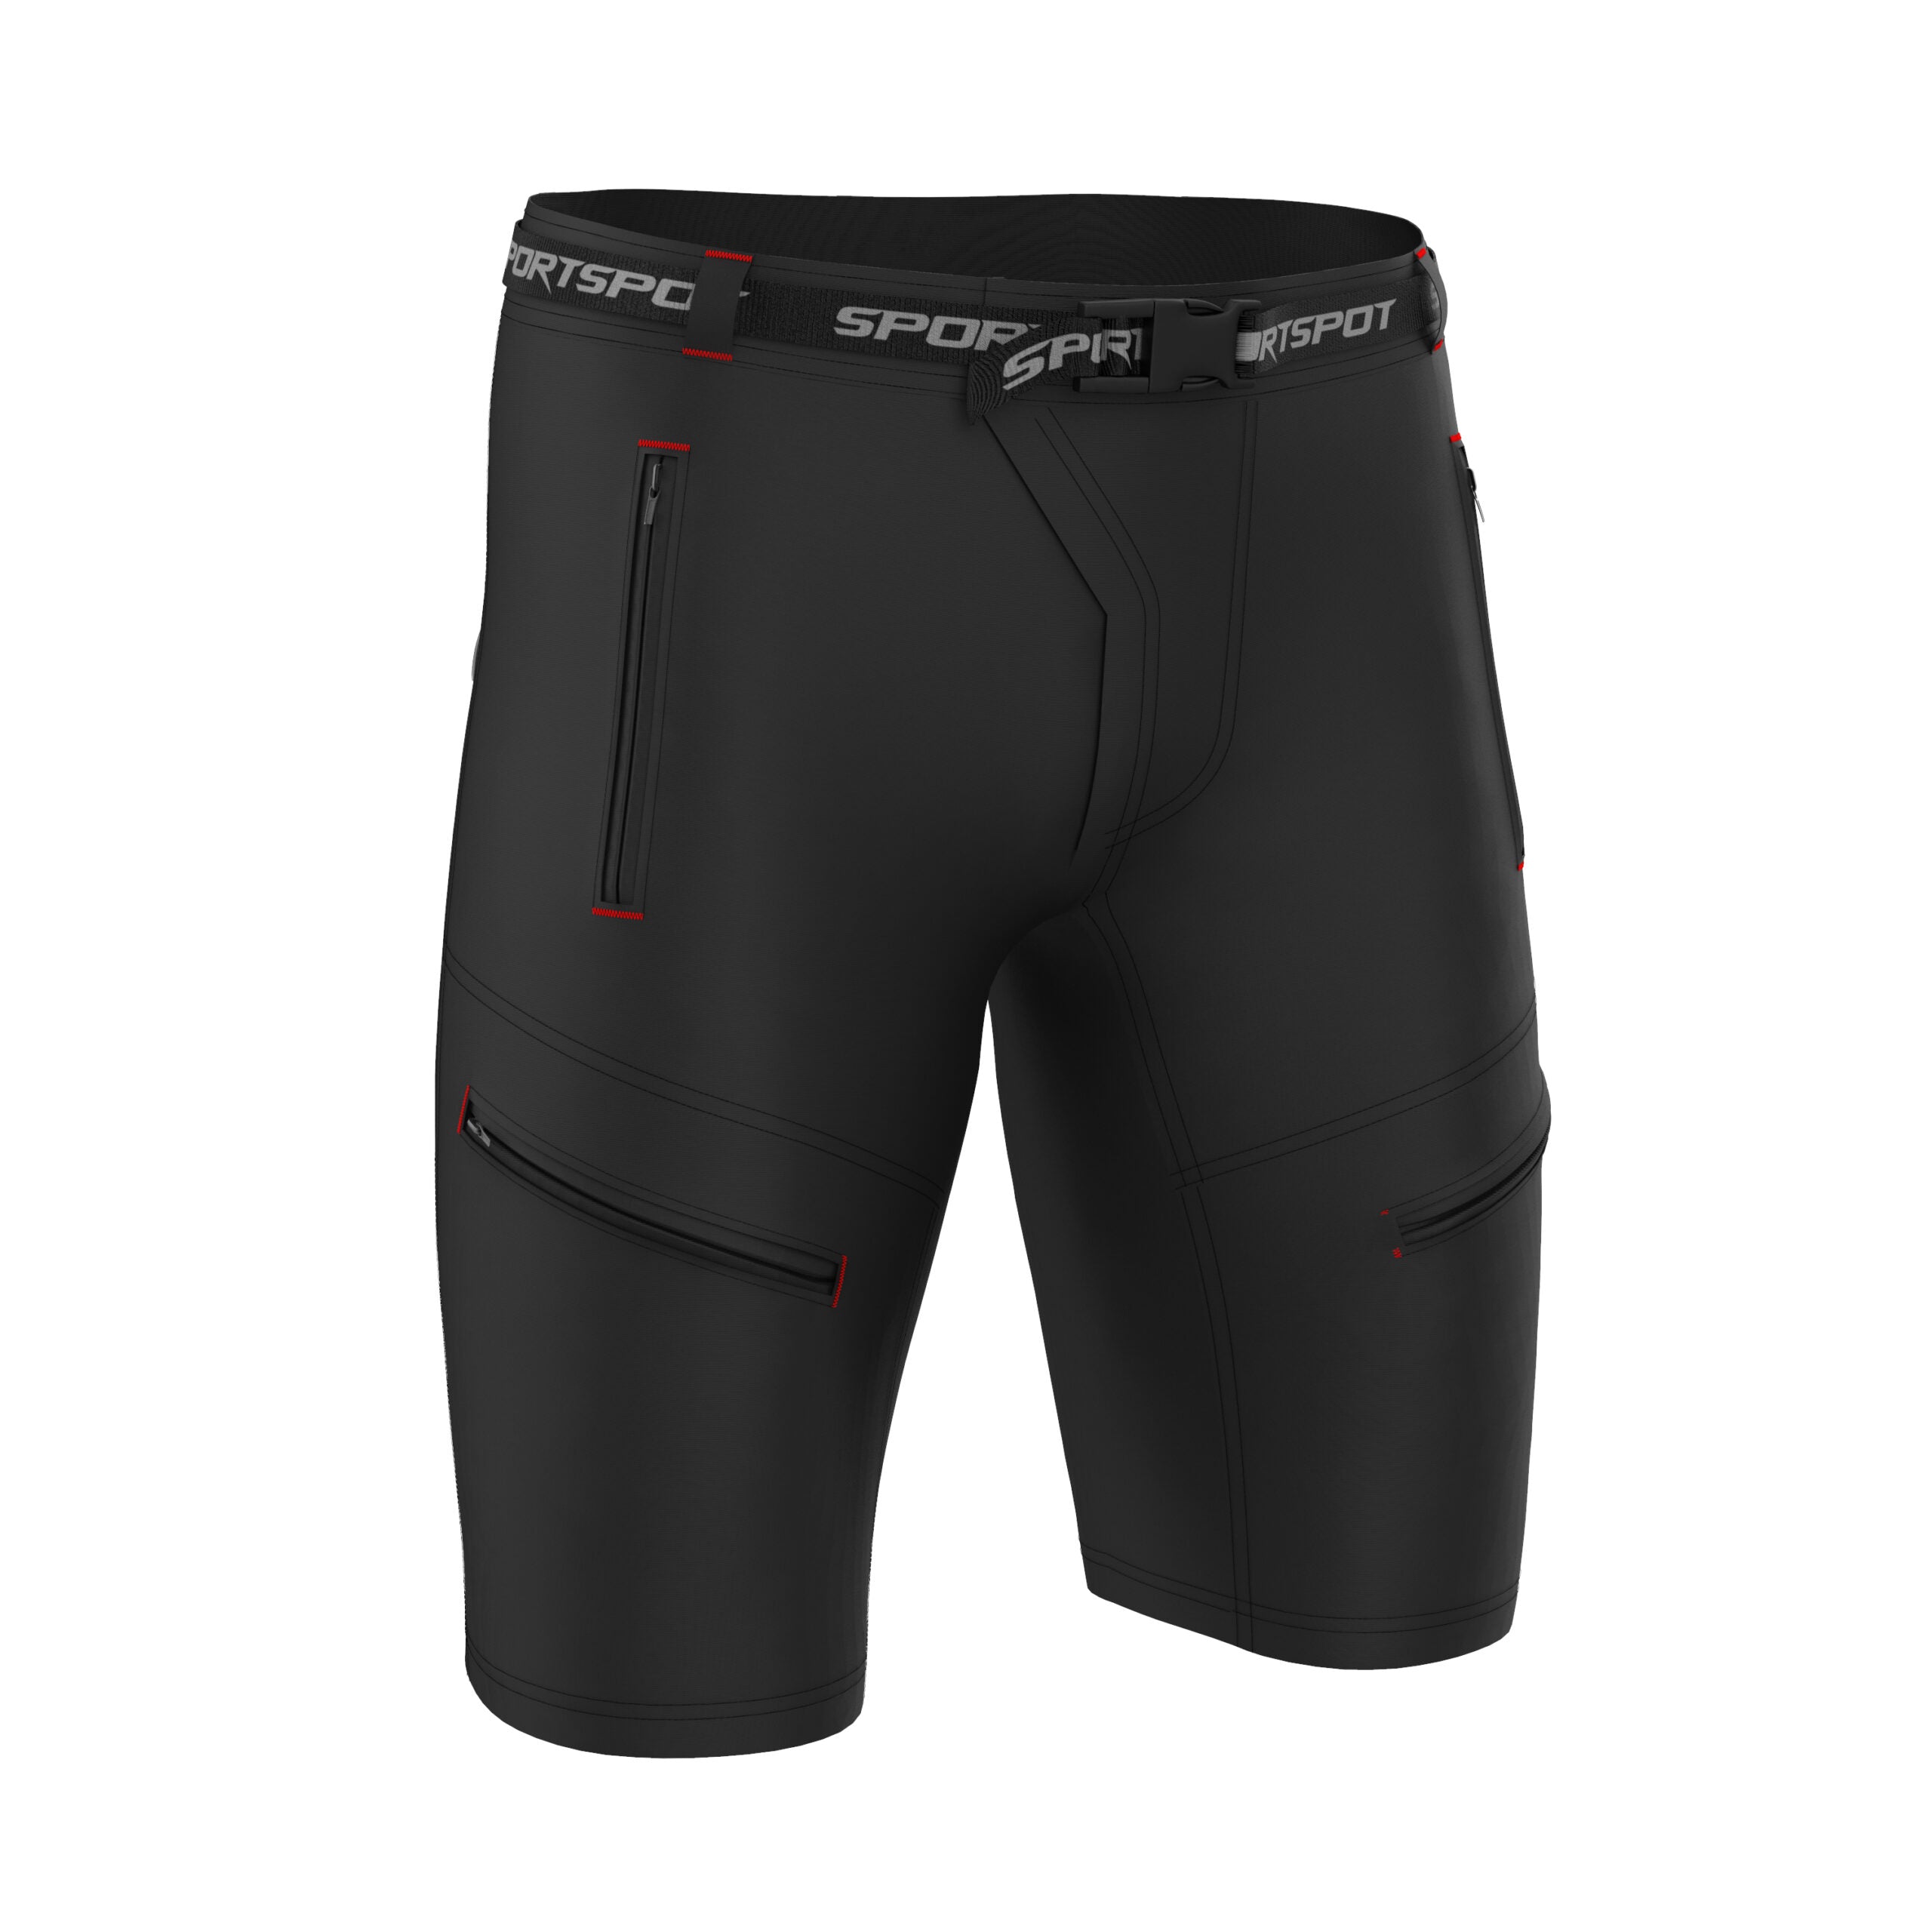 mtb mountain biking black shorts with underpants